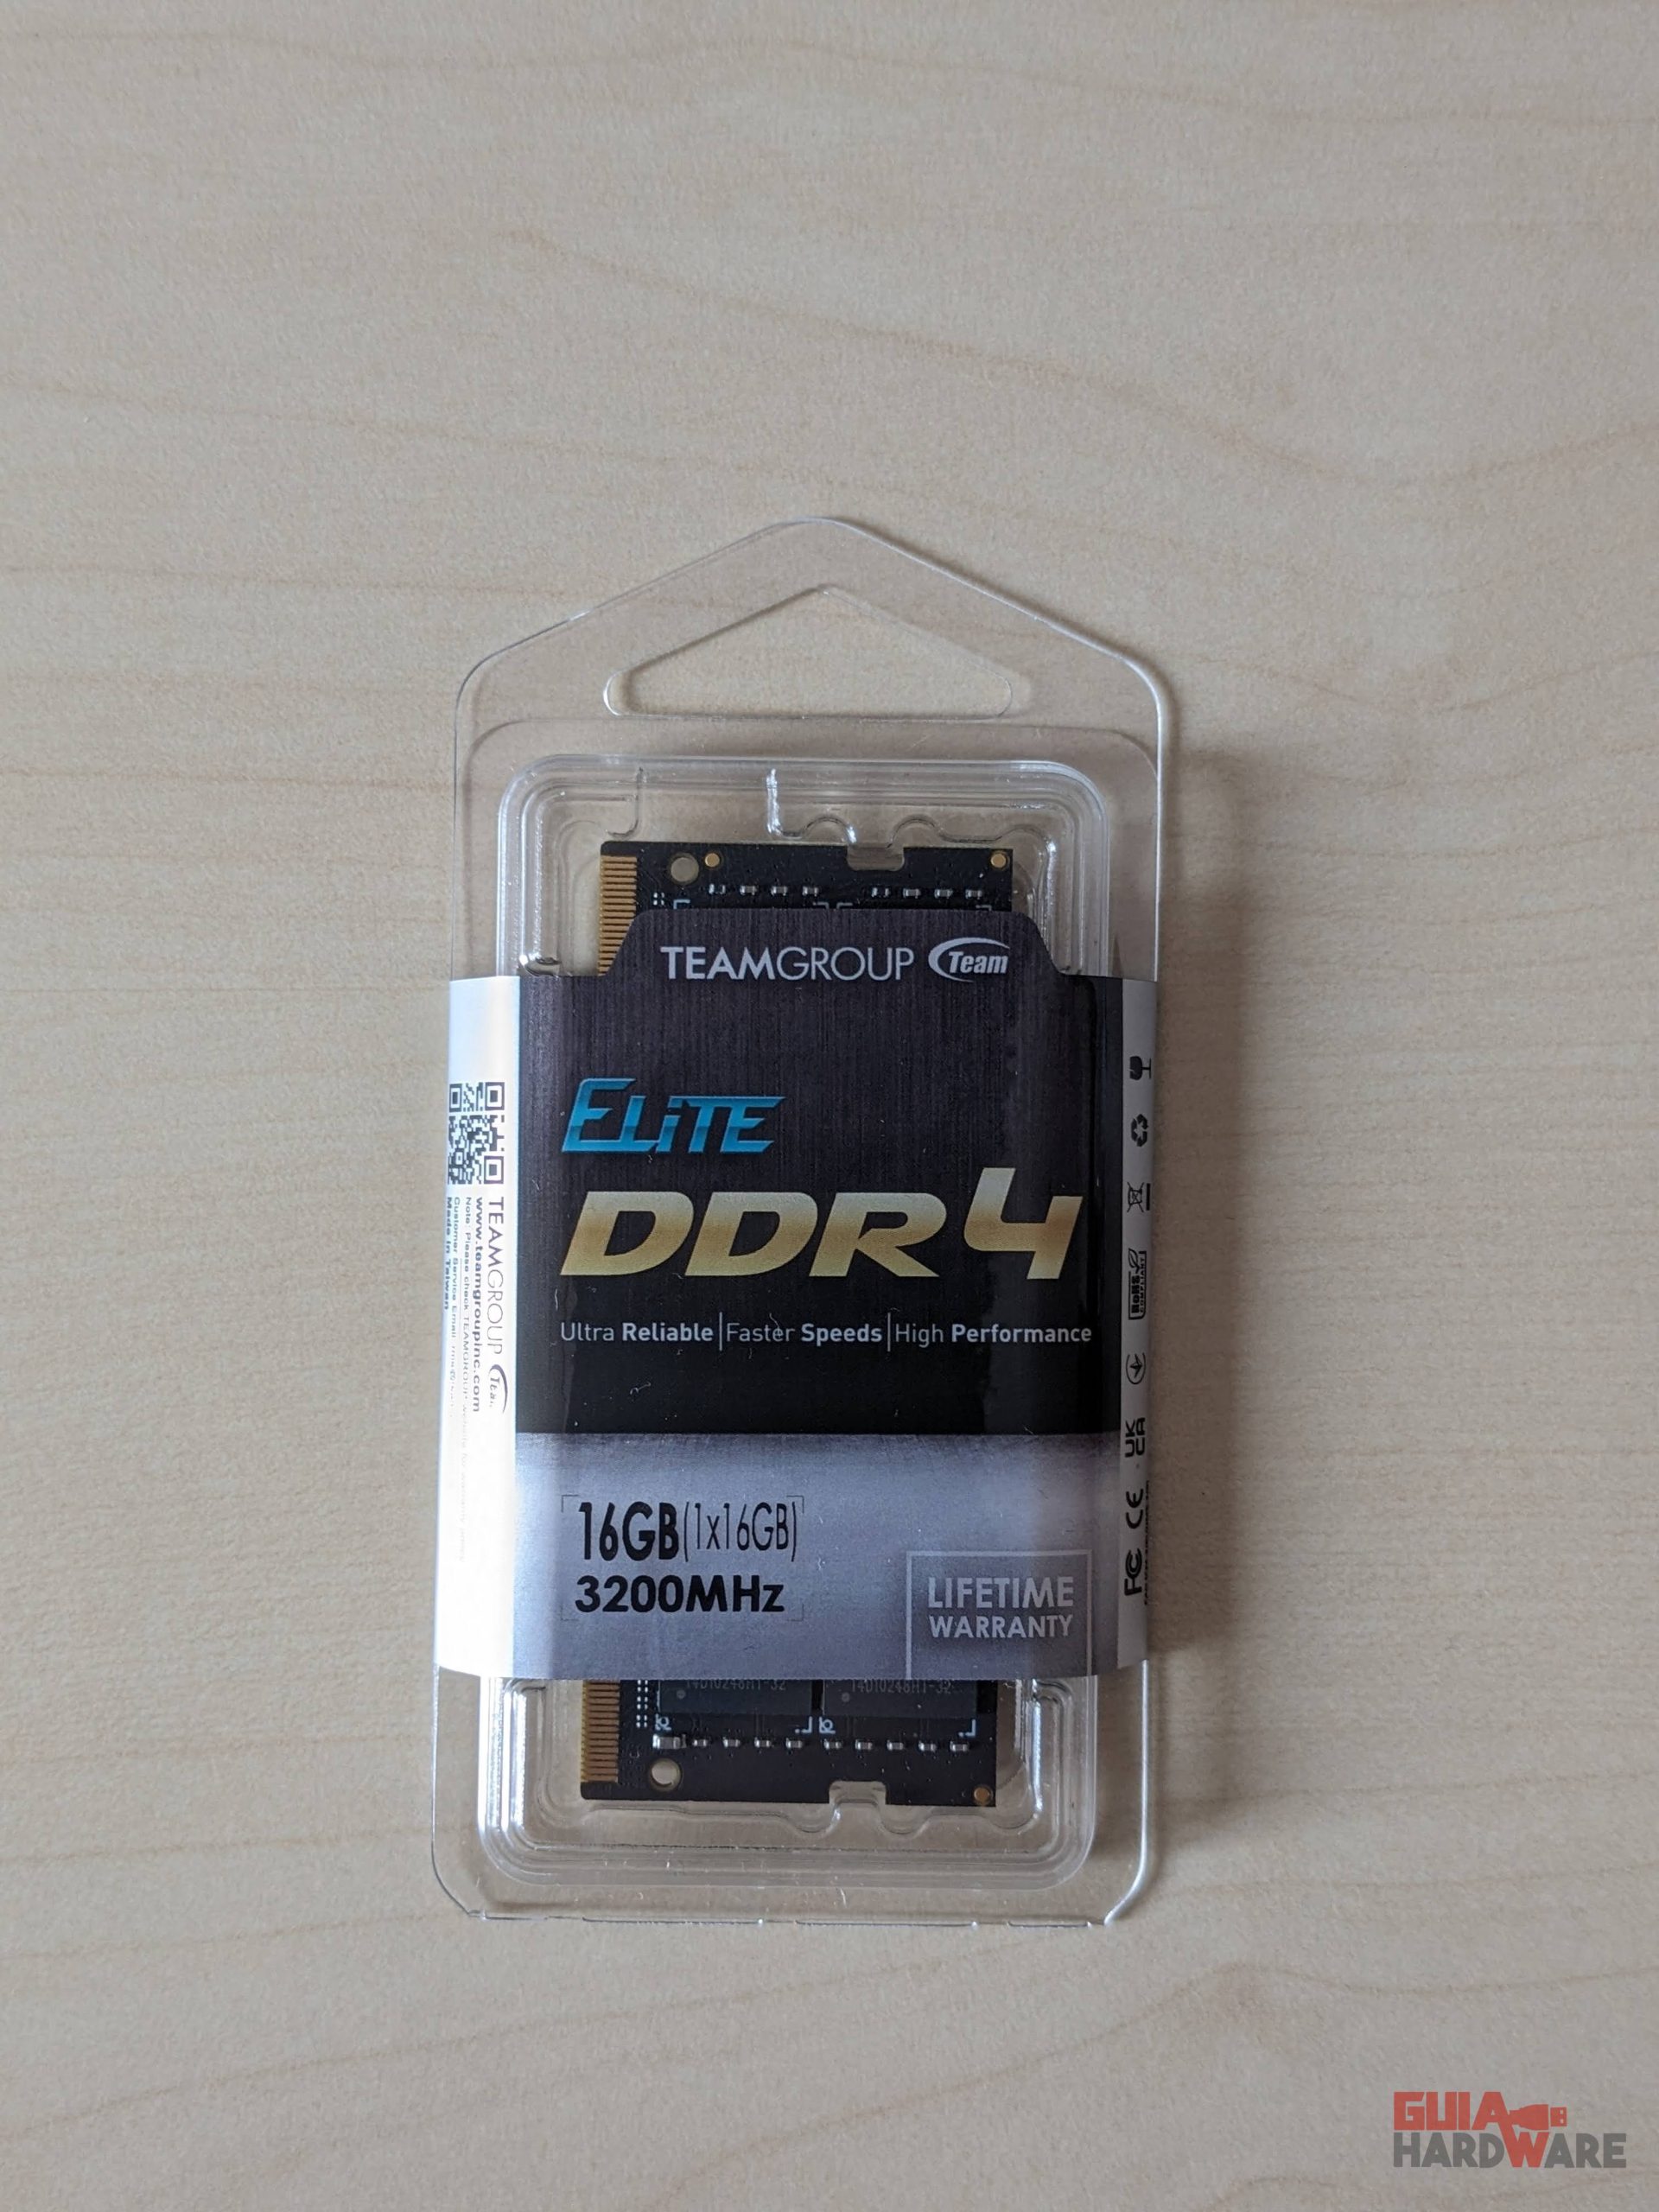 Teamgroup Elite DDR4 1X16GB 3200MHz